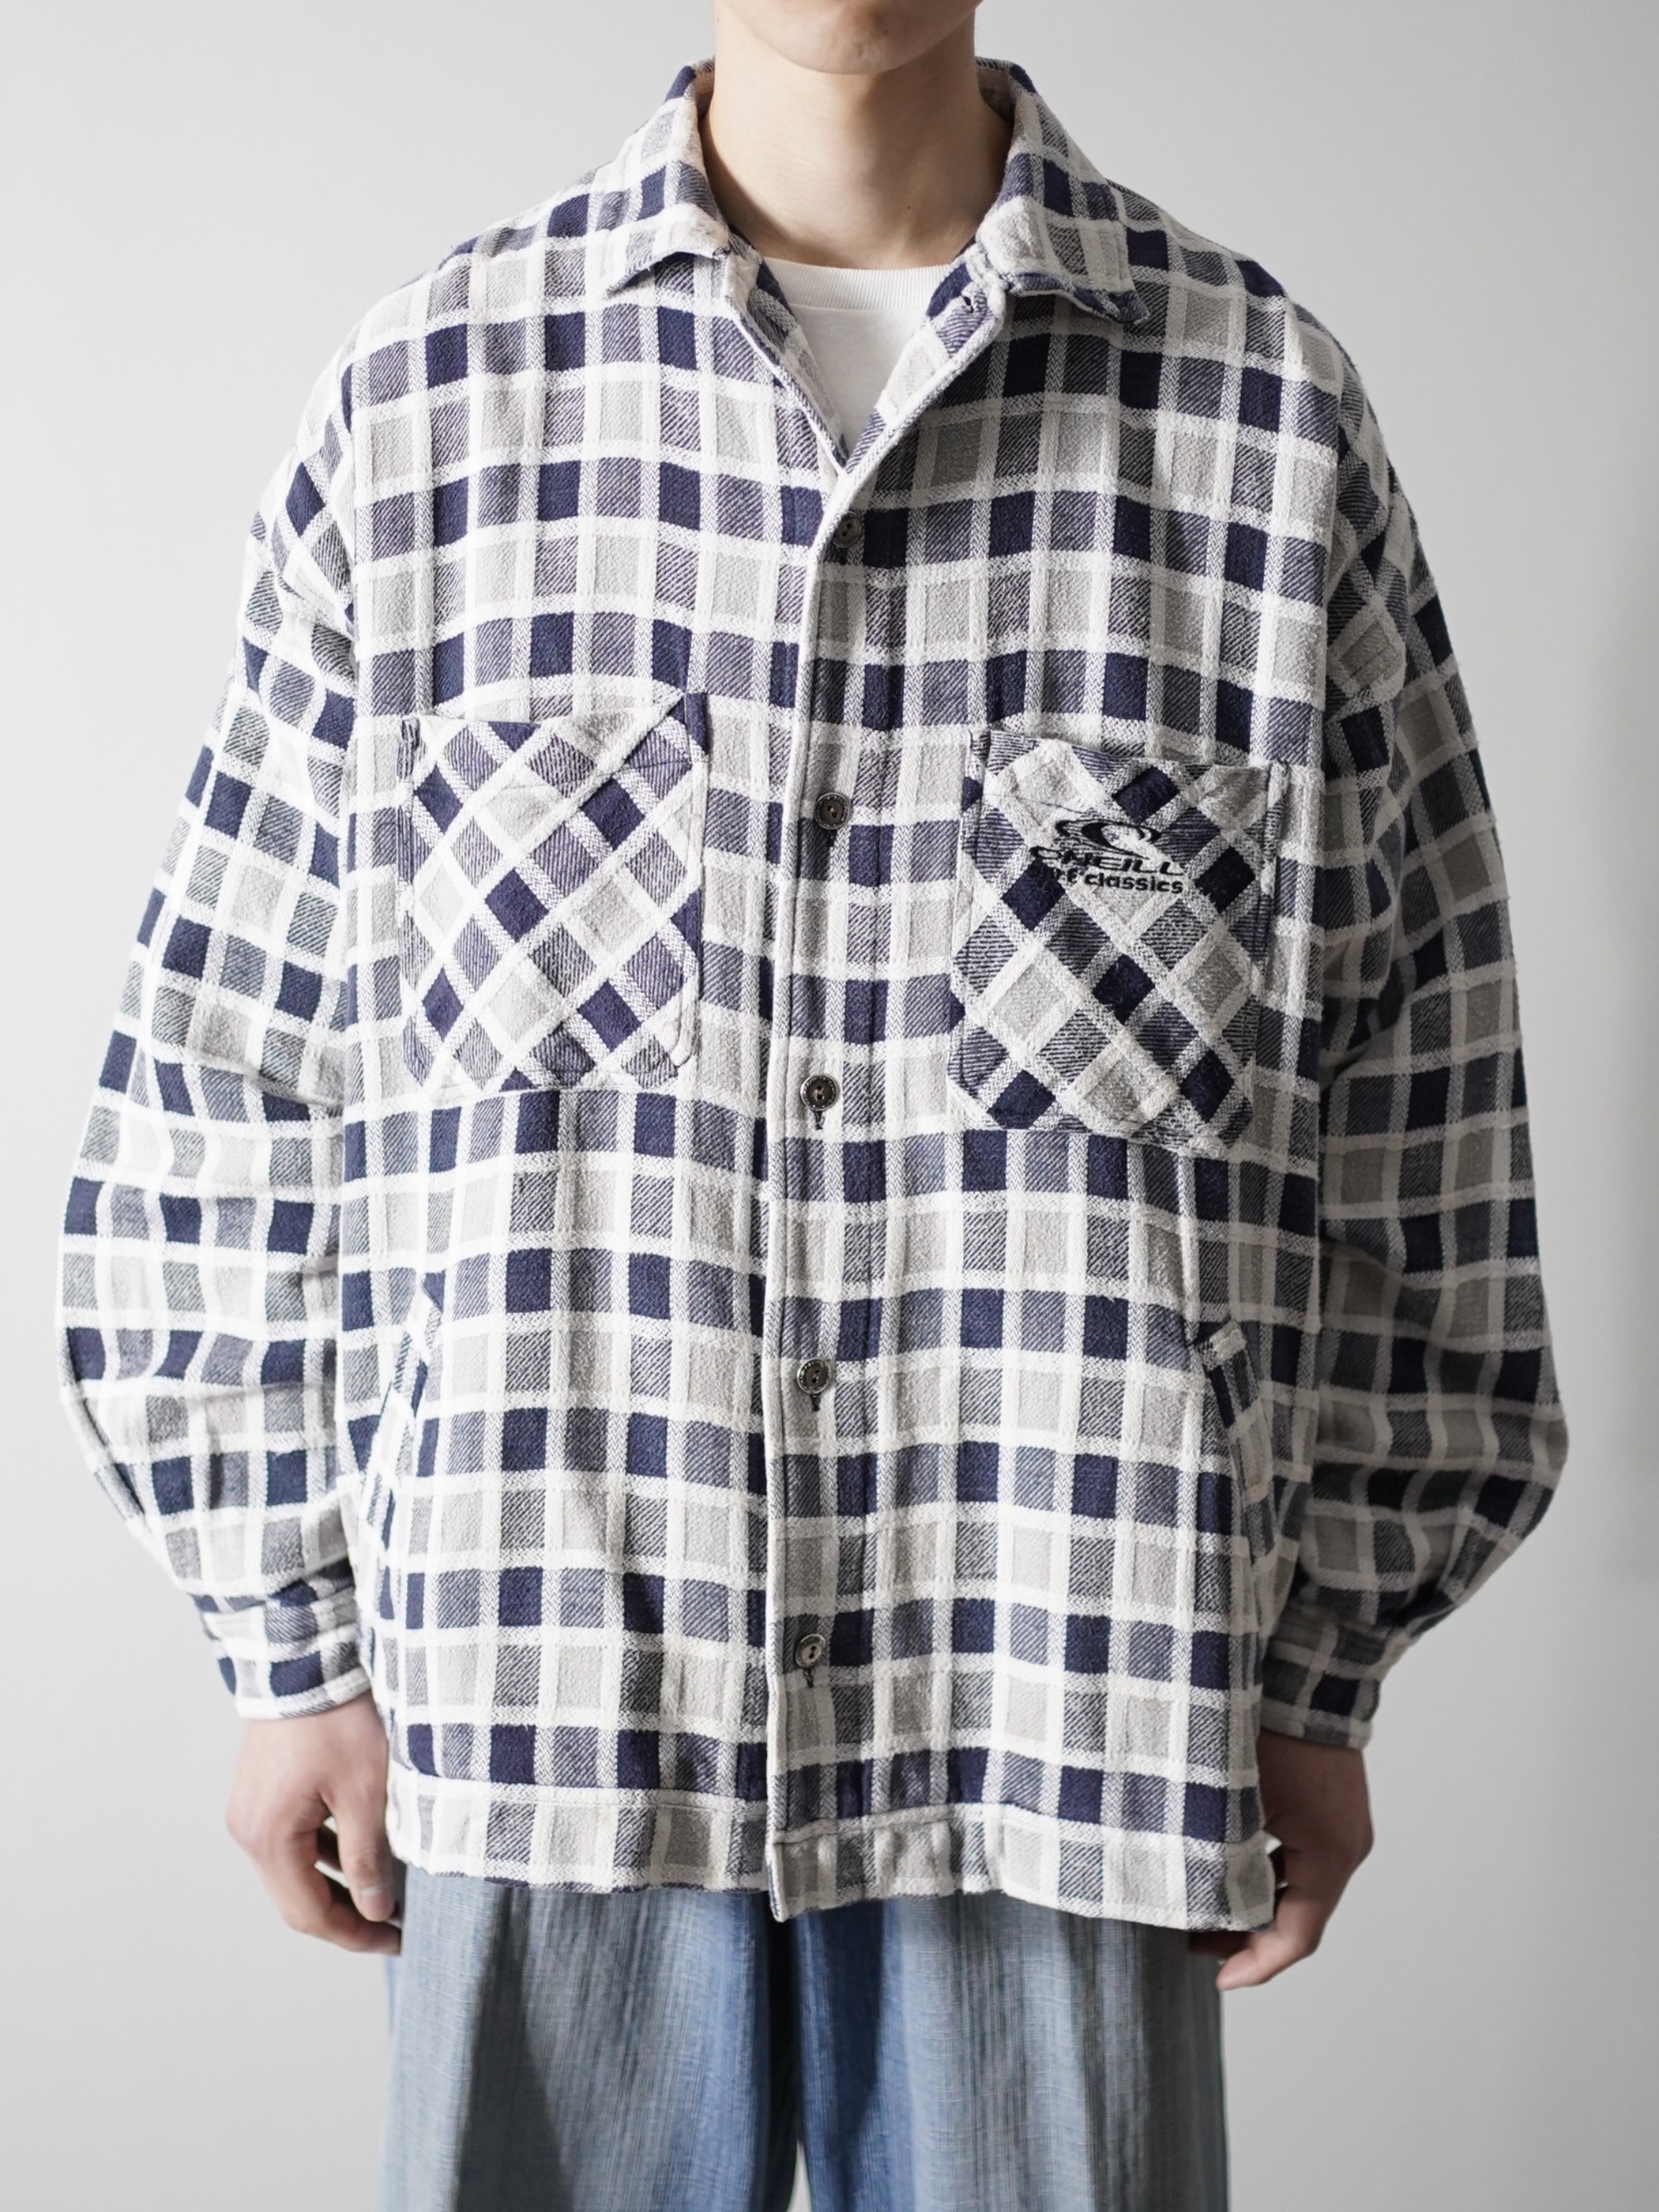 O'NEILL SANTA CRUZ flannel shirt jacket